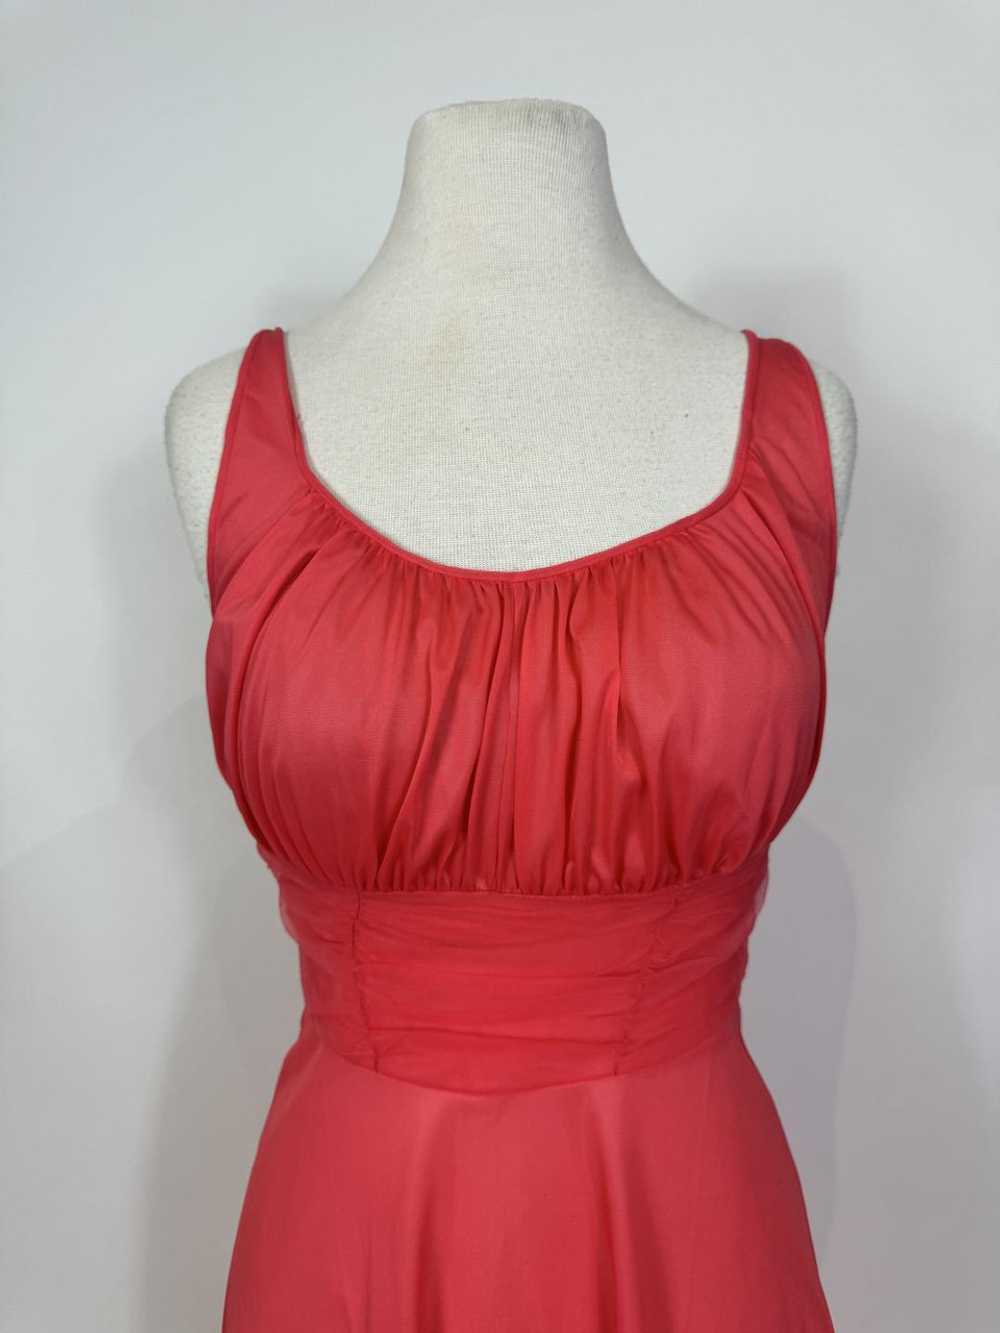 1960s Hot Pink Rogers Chiffon Slip Dress Deadstoc… - image 2